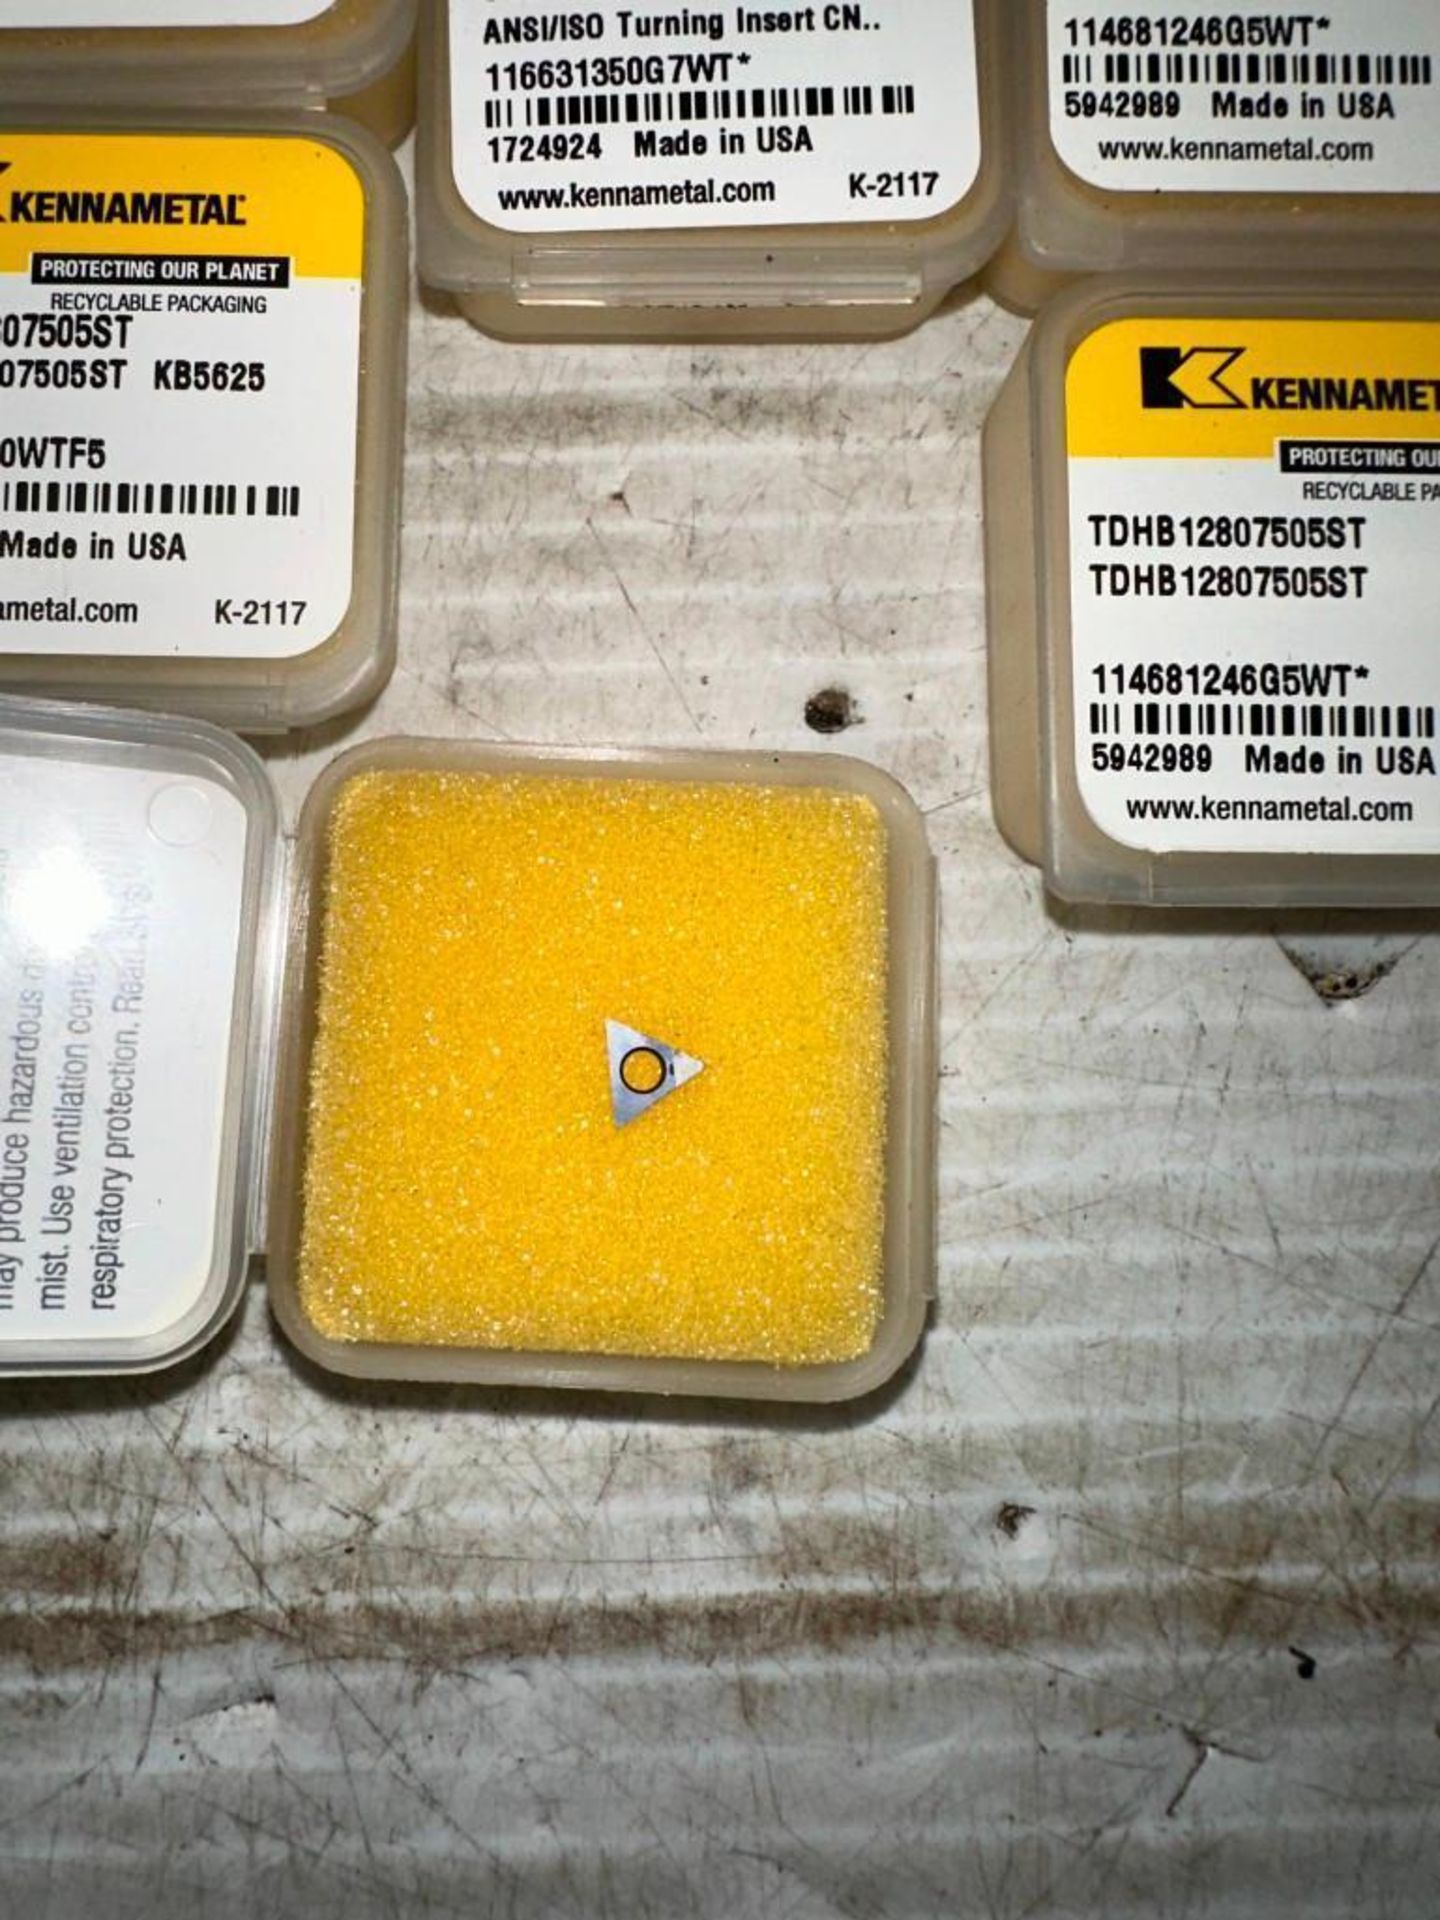 Lot of Kennametal #TDHB12807505ST Carbide Inserts - Image 2 of 3